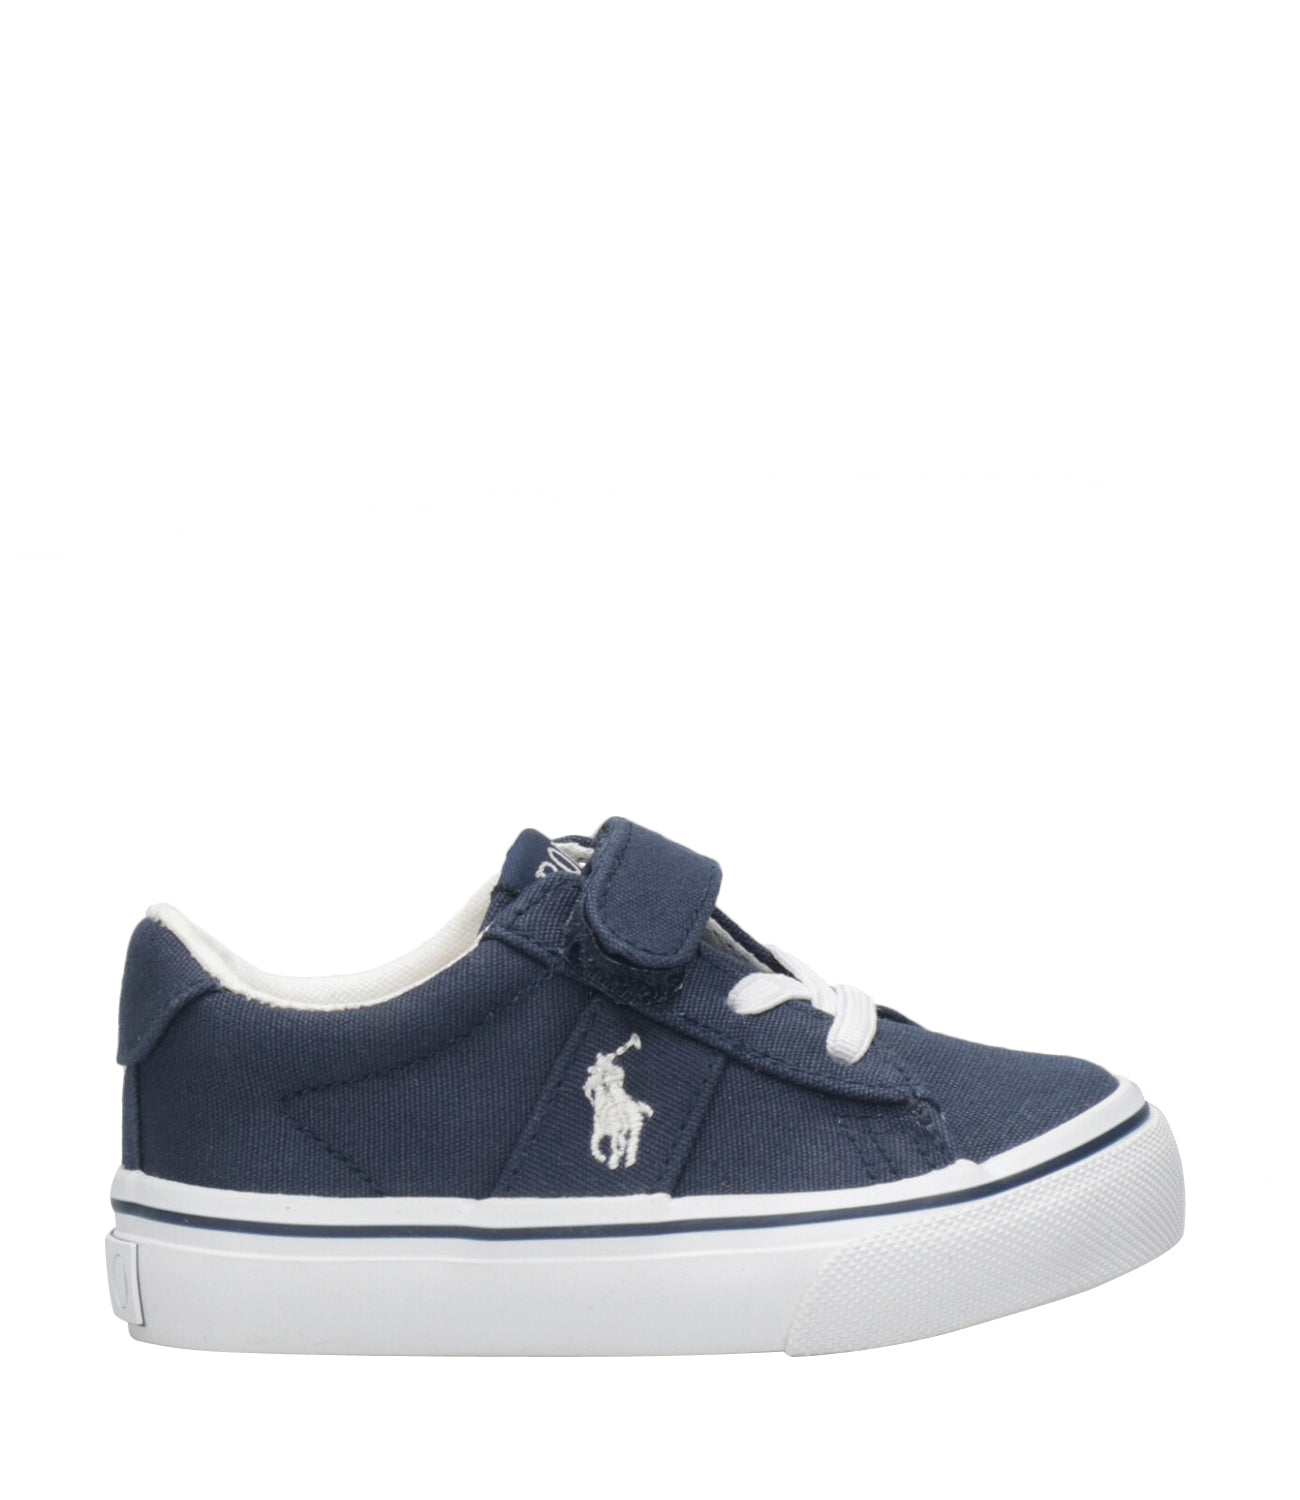 Ralph Lauren Childrenswear | Sneakers Sayer PS Blu navy e Bianco